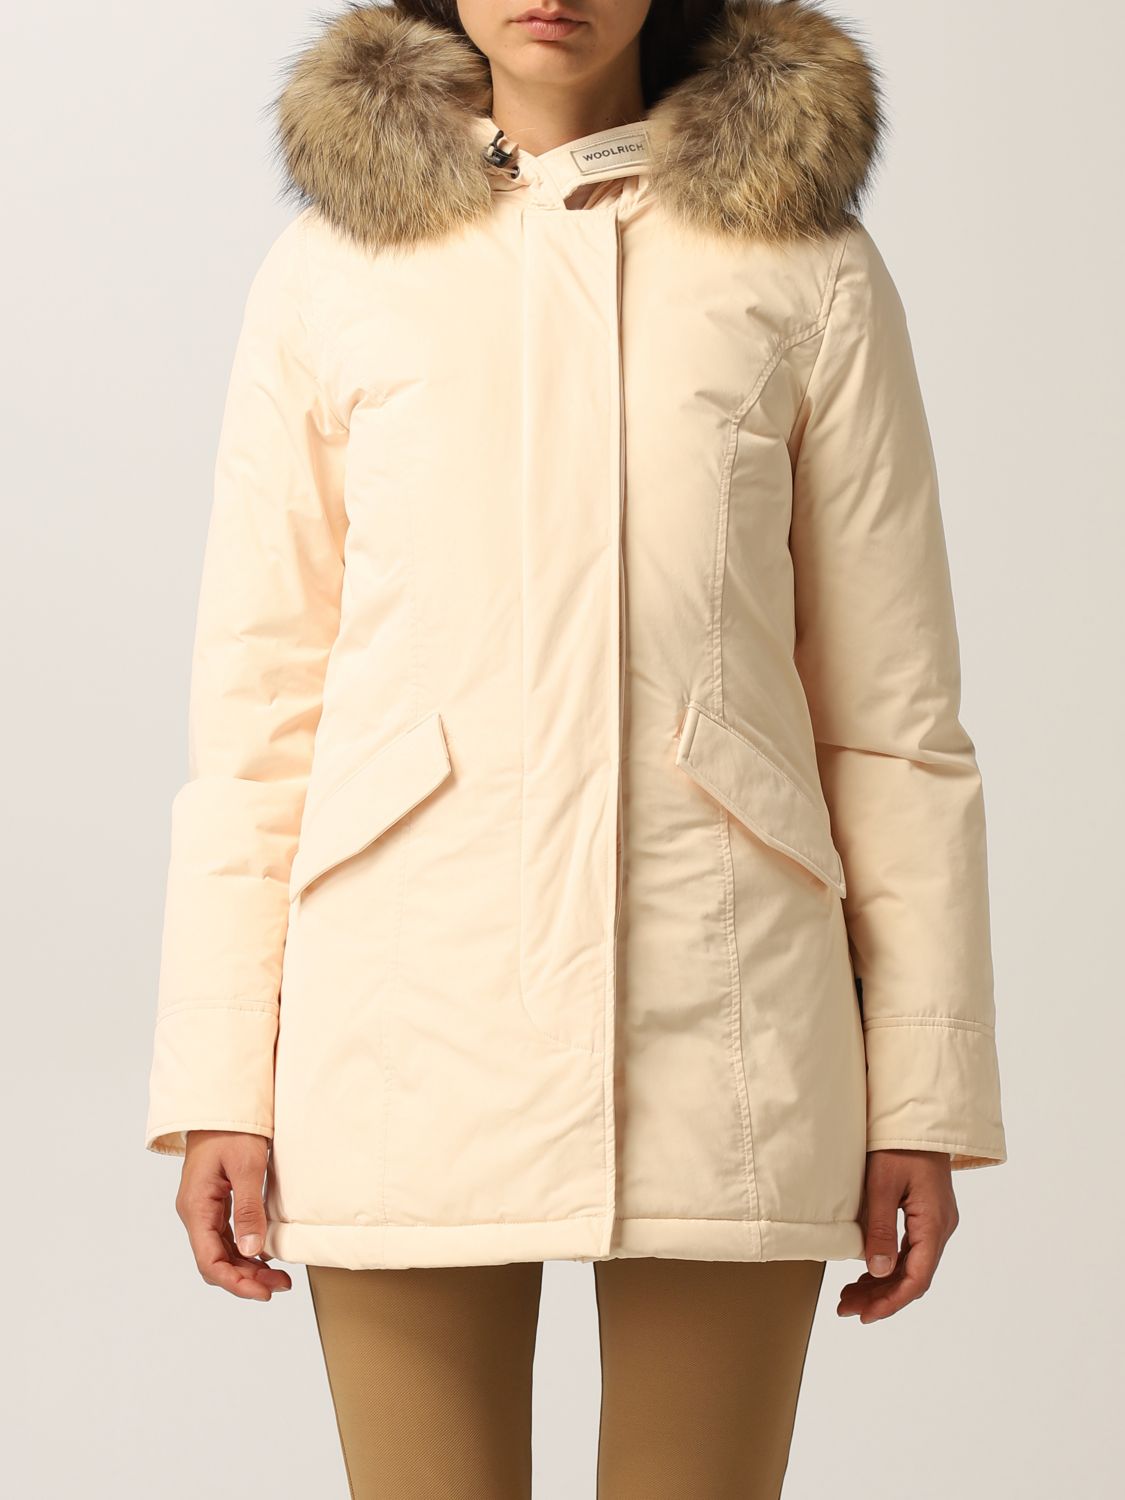 Convergeren Kwijtschelding Zonnig WOOLRICH: jacket for woman - Ivory | Woolrich jacket CFWWOU0541FRUT0573  online on GIGLIO.COM